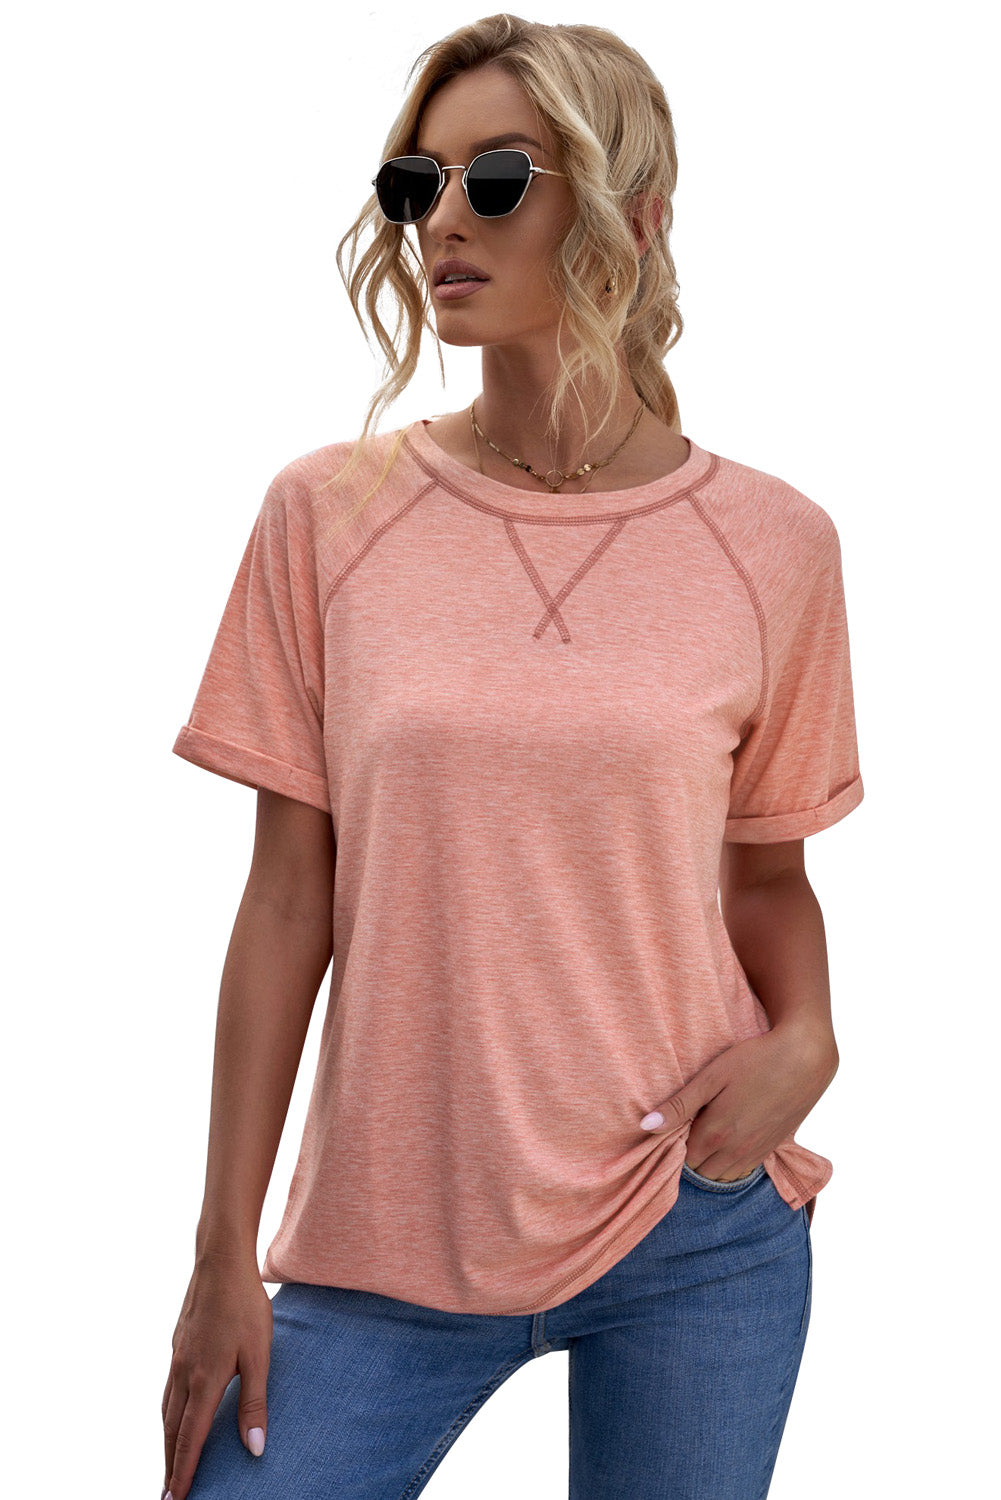 Women's Short Sleeve Pink Heathered Round Neck T-shirt